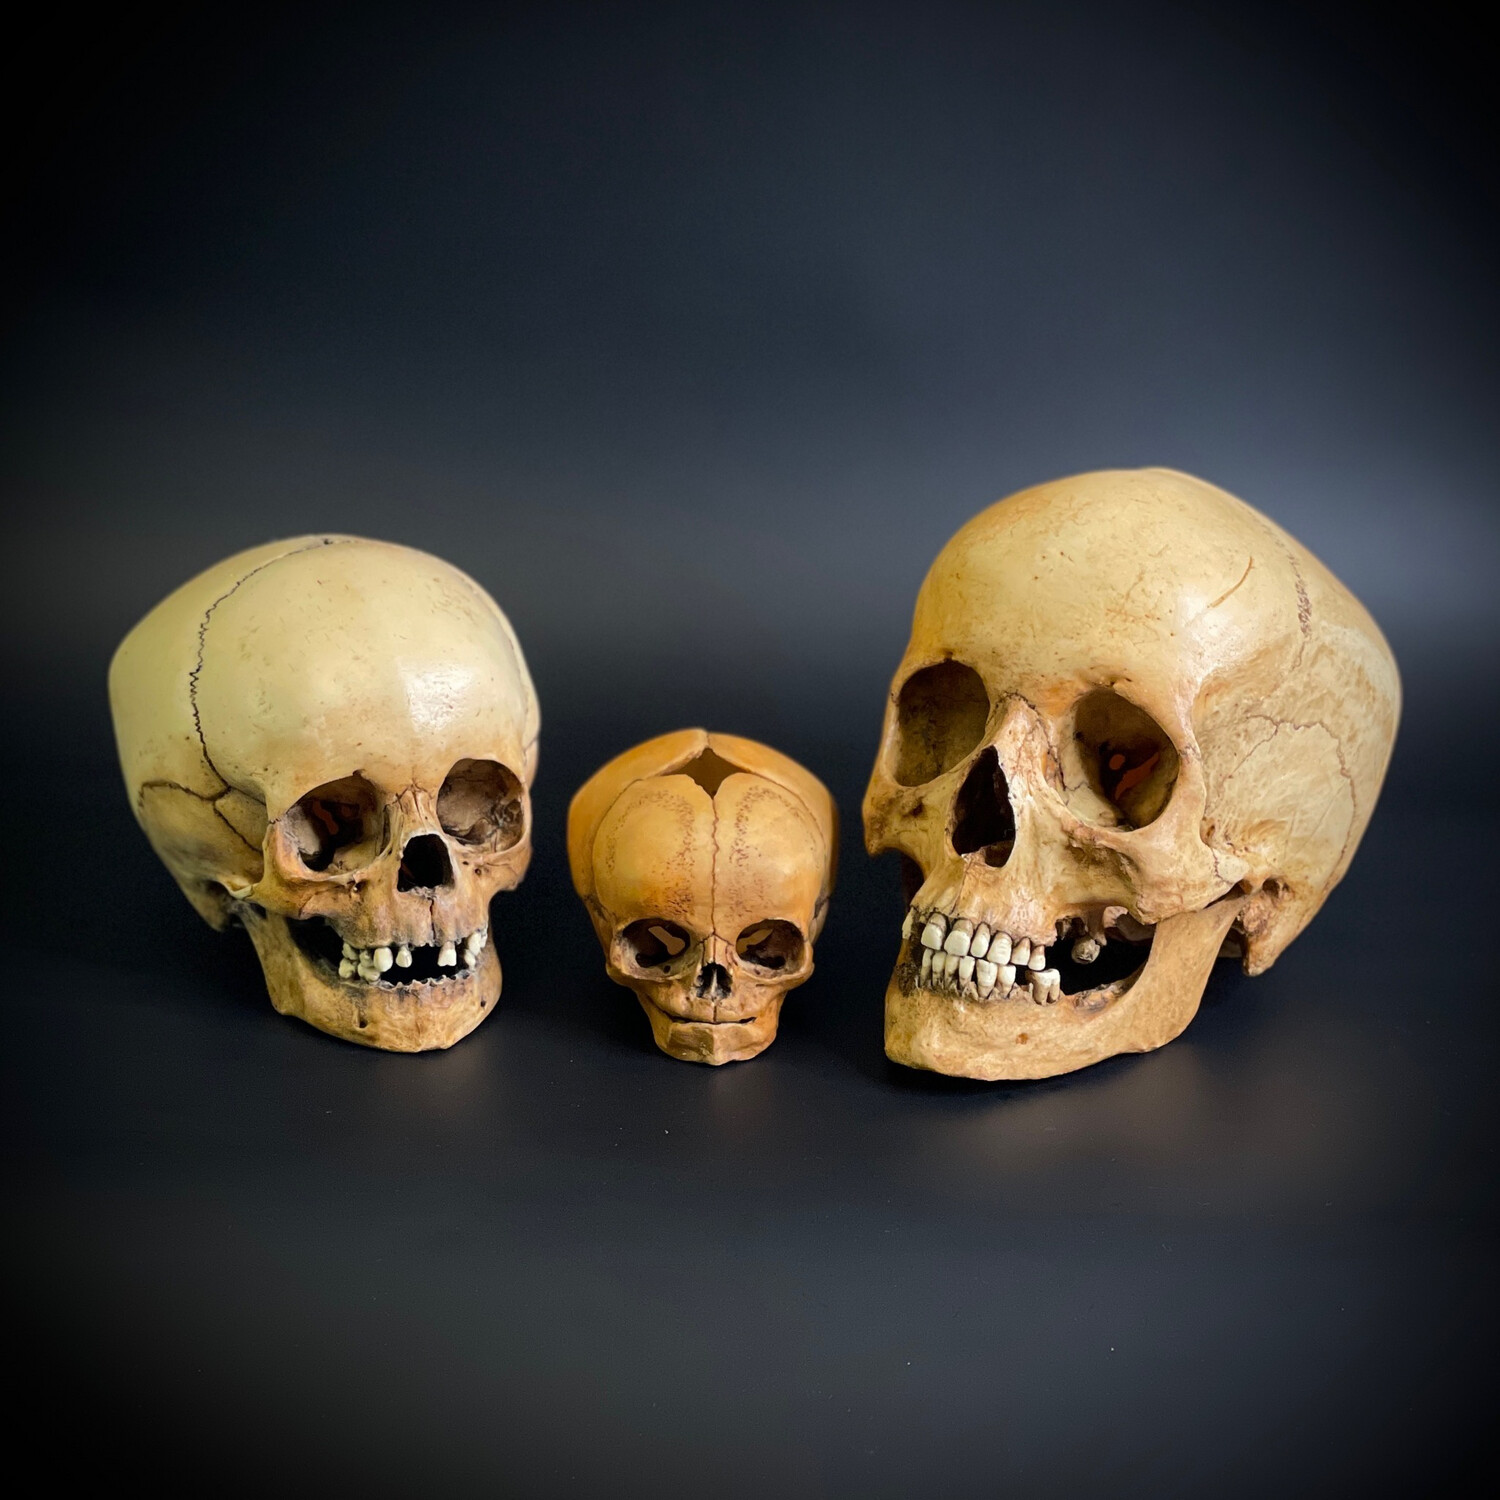 Женский череп человека + череп ребенка + череп младенца (анатомические модели)